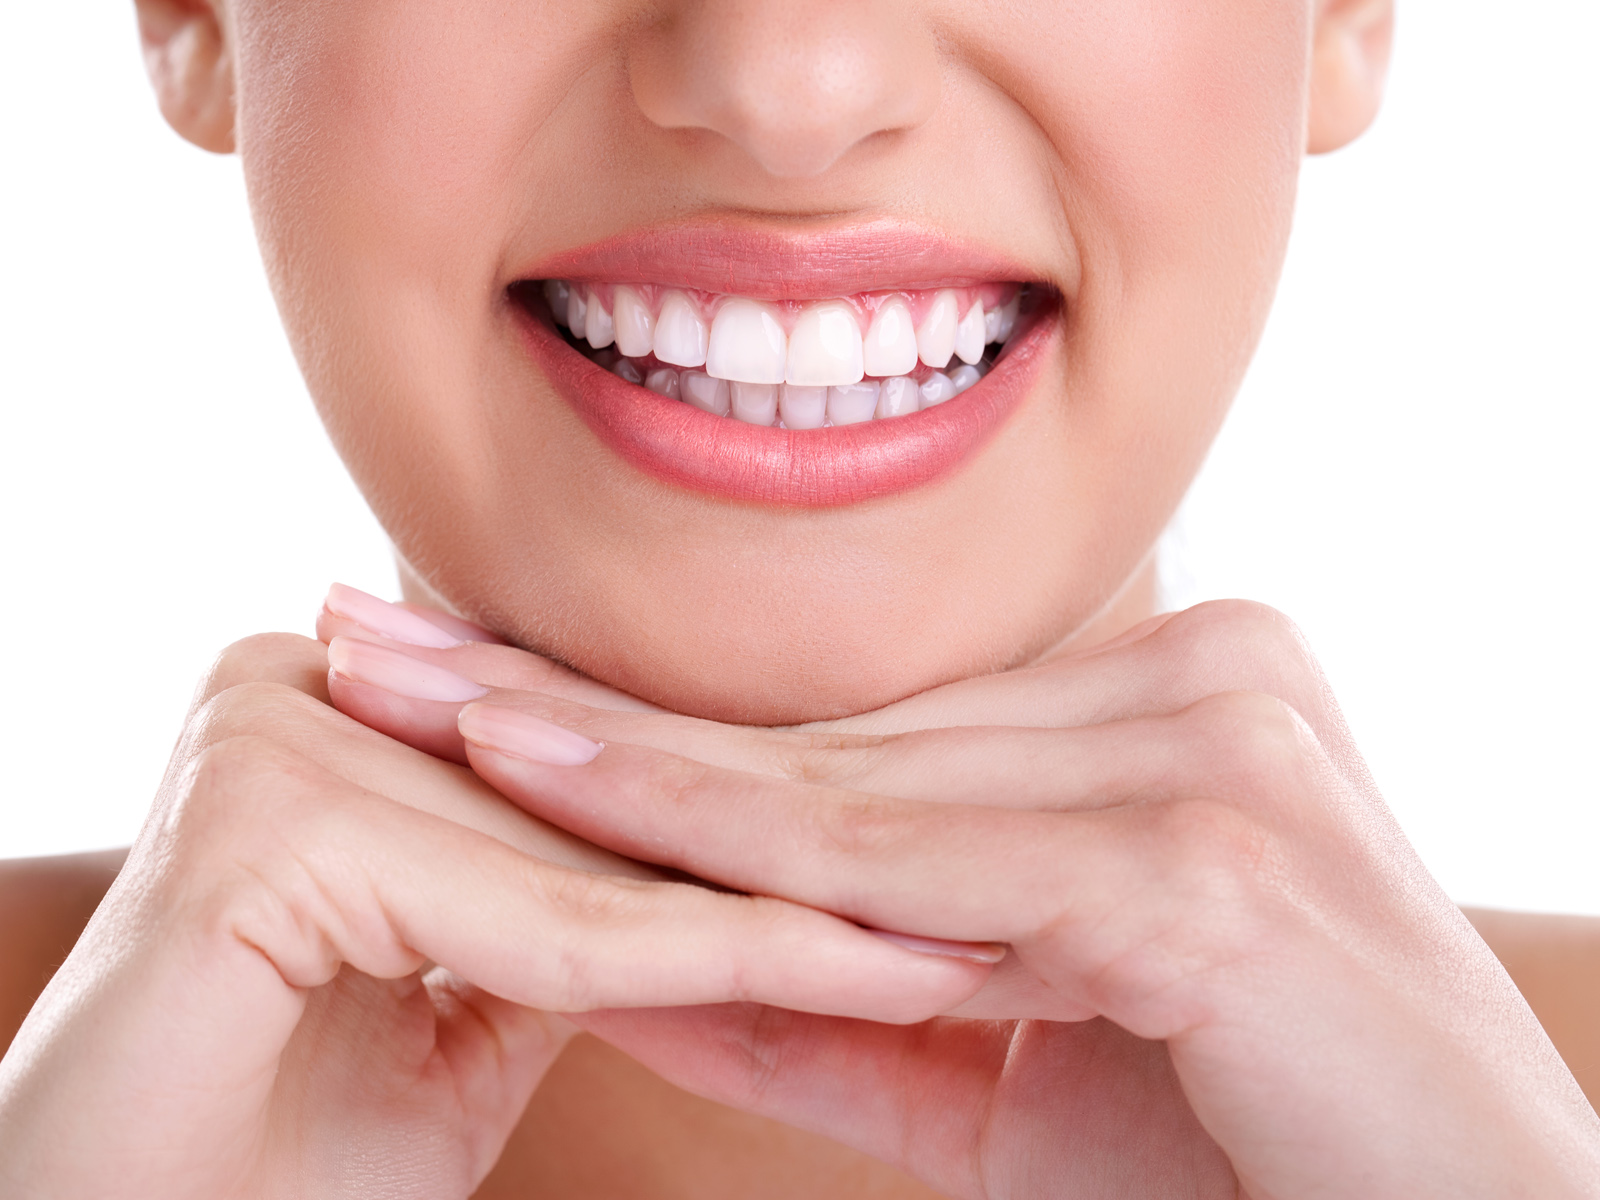 What Is The Purpose of Teeth Polishing?